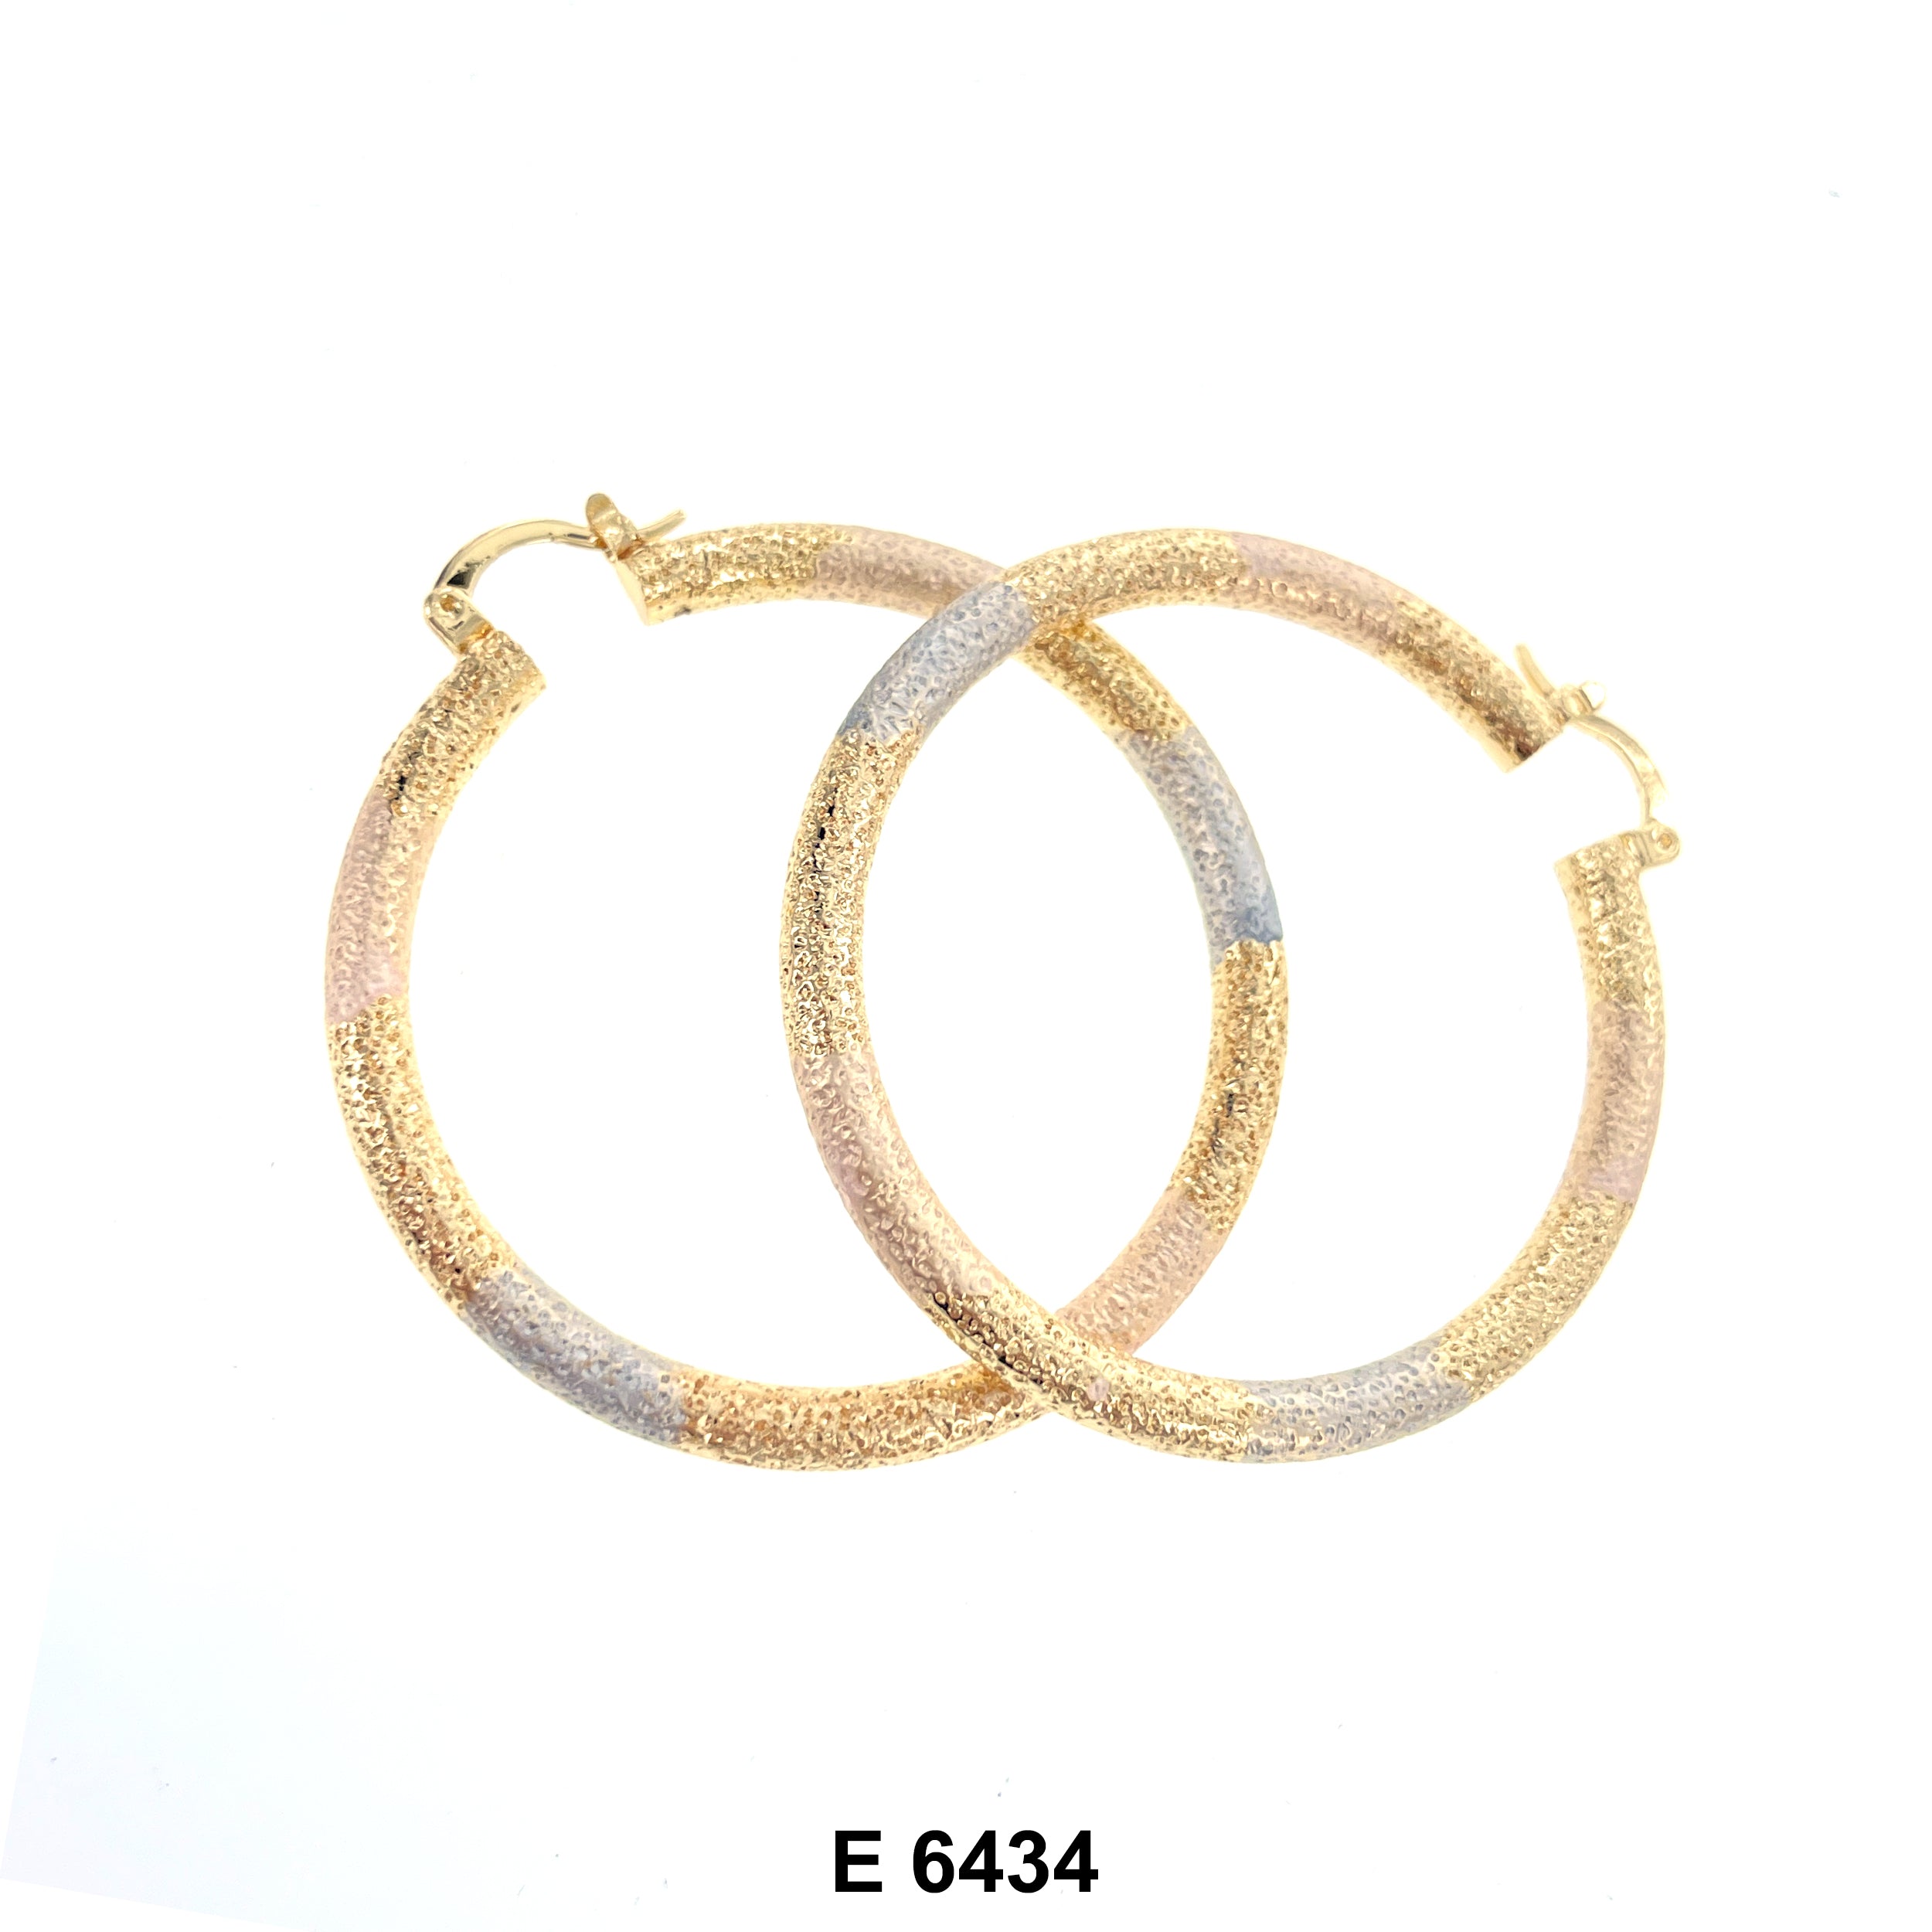 Engraved Hoop Earrings E 6434